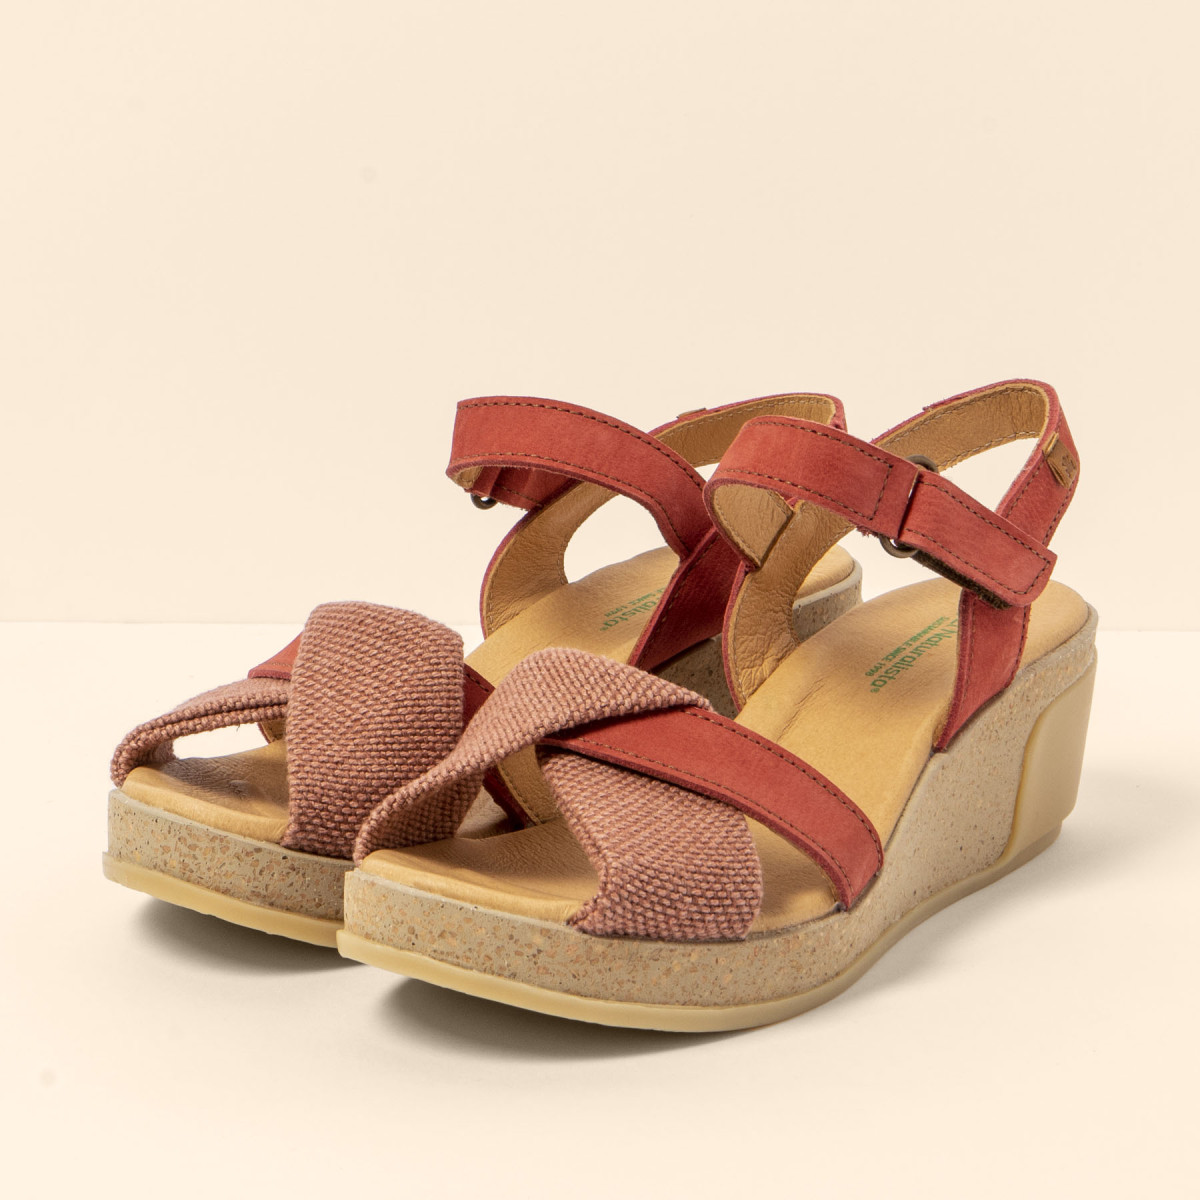 Sandales confortables compensées en cuir torsadé - Rouge - El naturalista